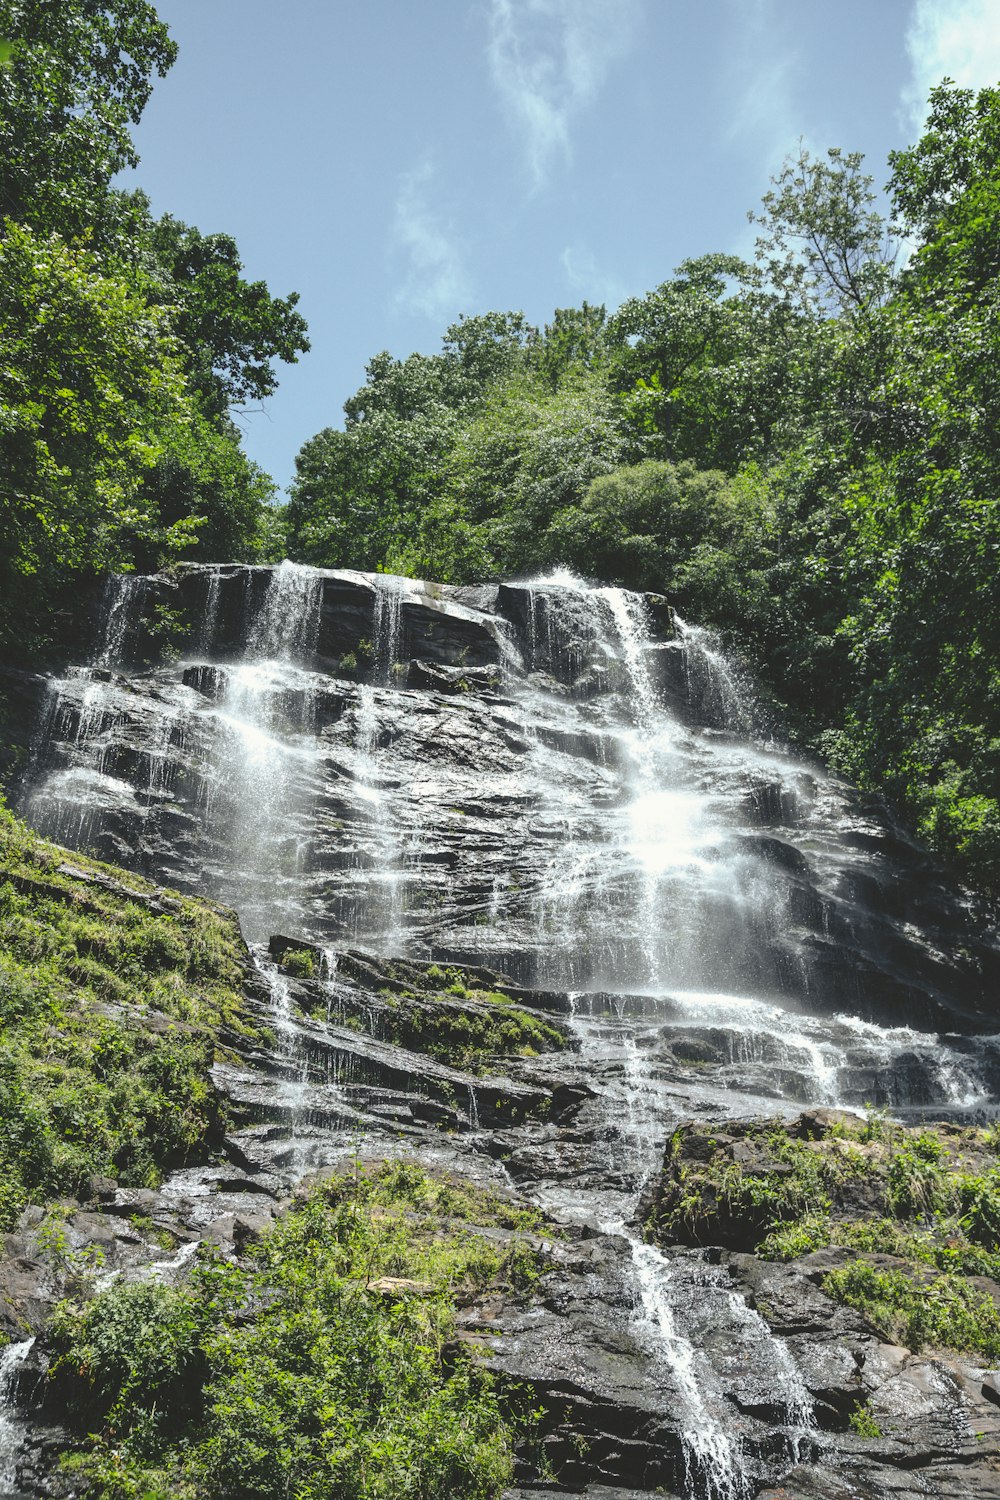 Kiliyur Falls with trees around it